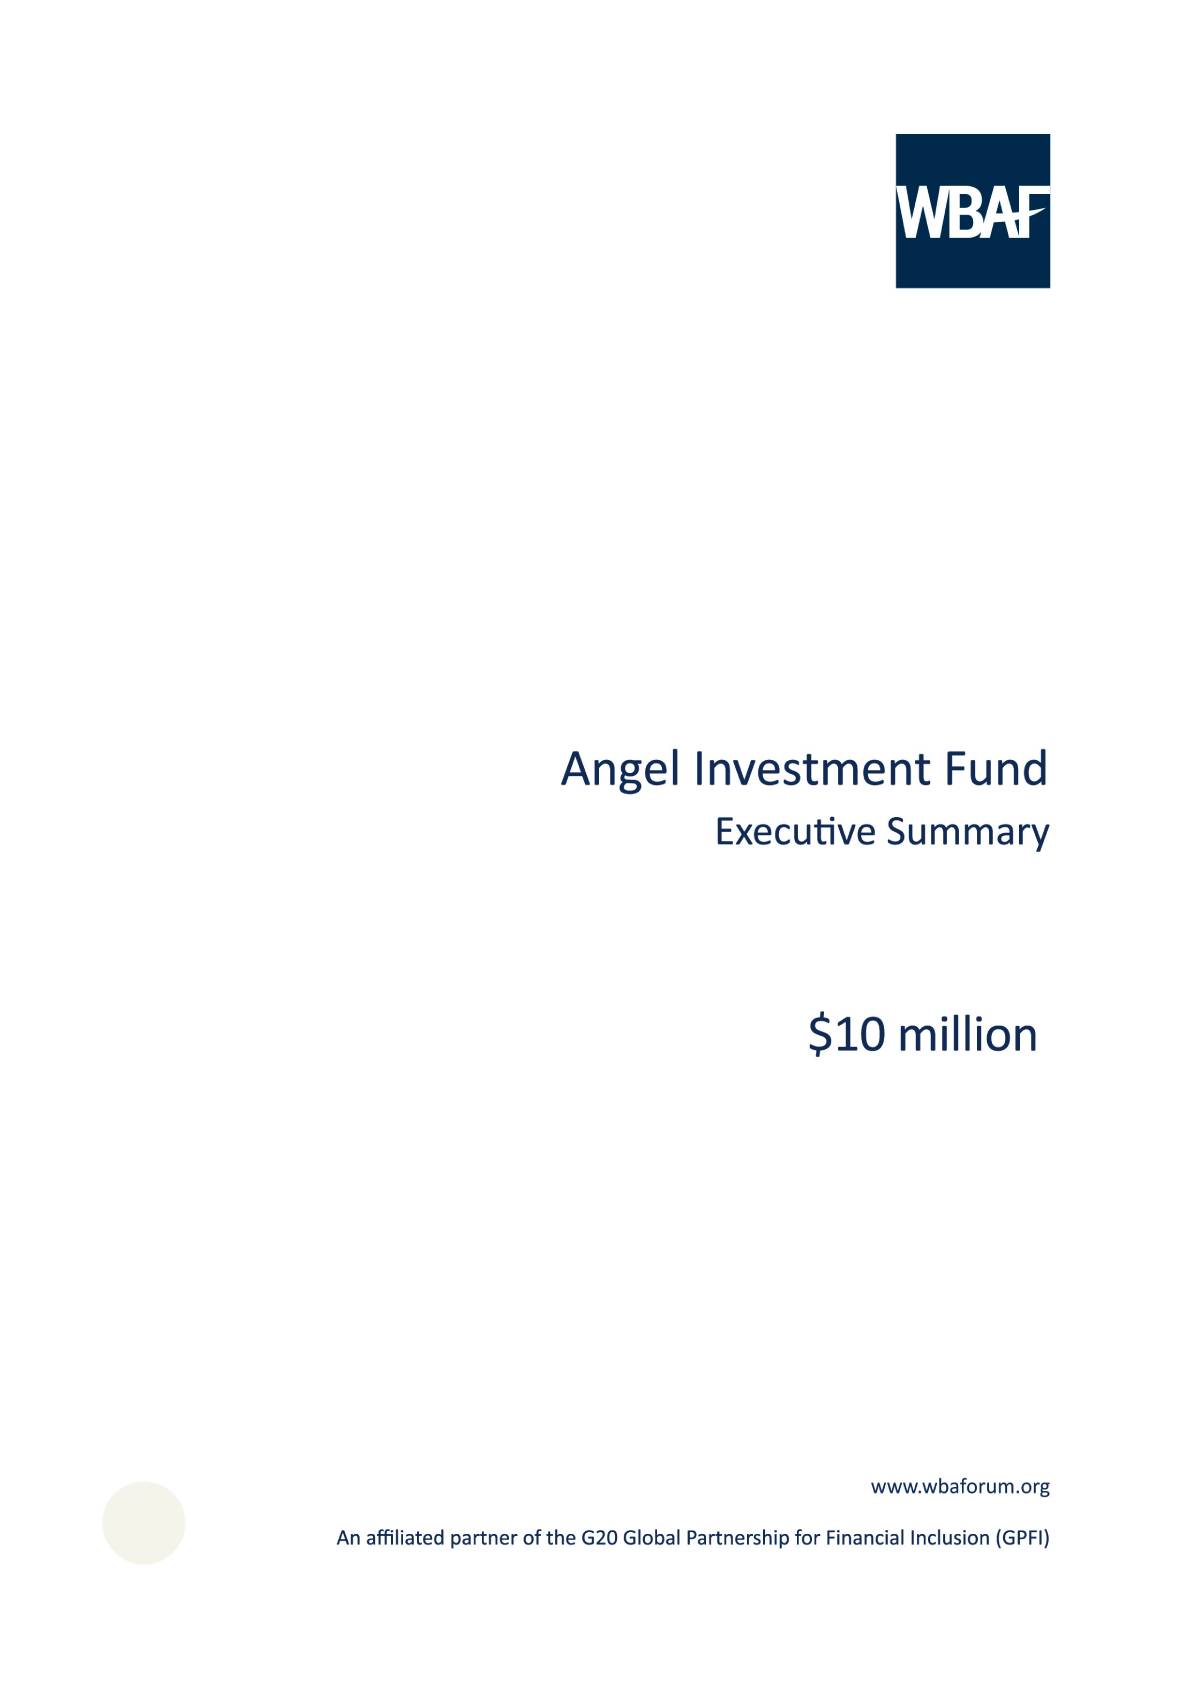 Angel Investment Fund - Executive Summary